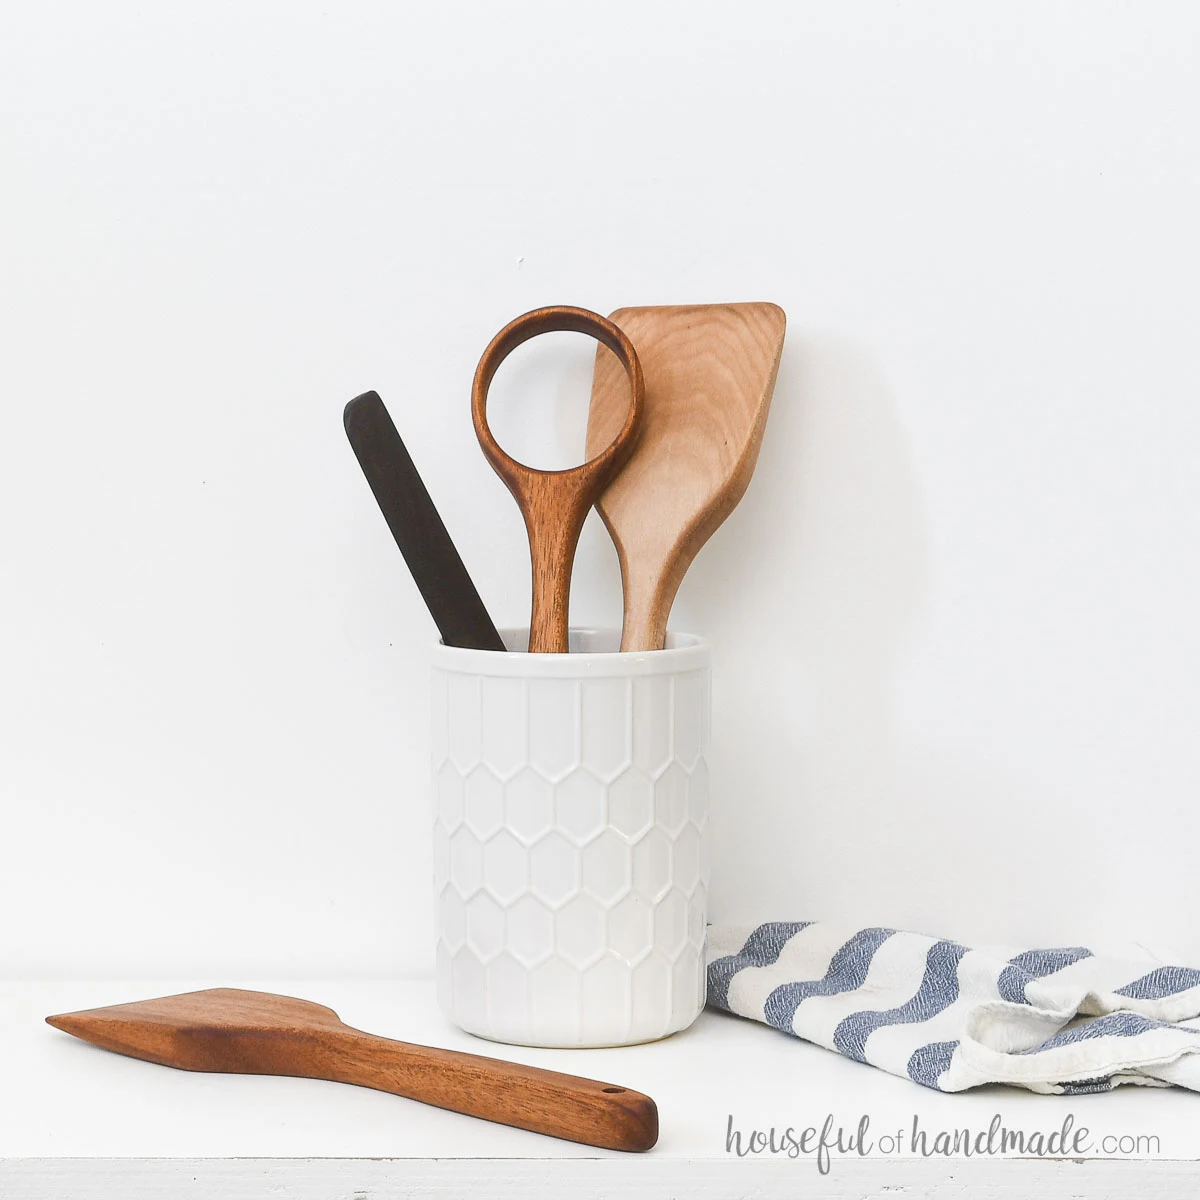 Four DIY wood cooking utensils in a white utensil holder.